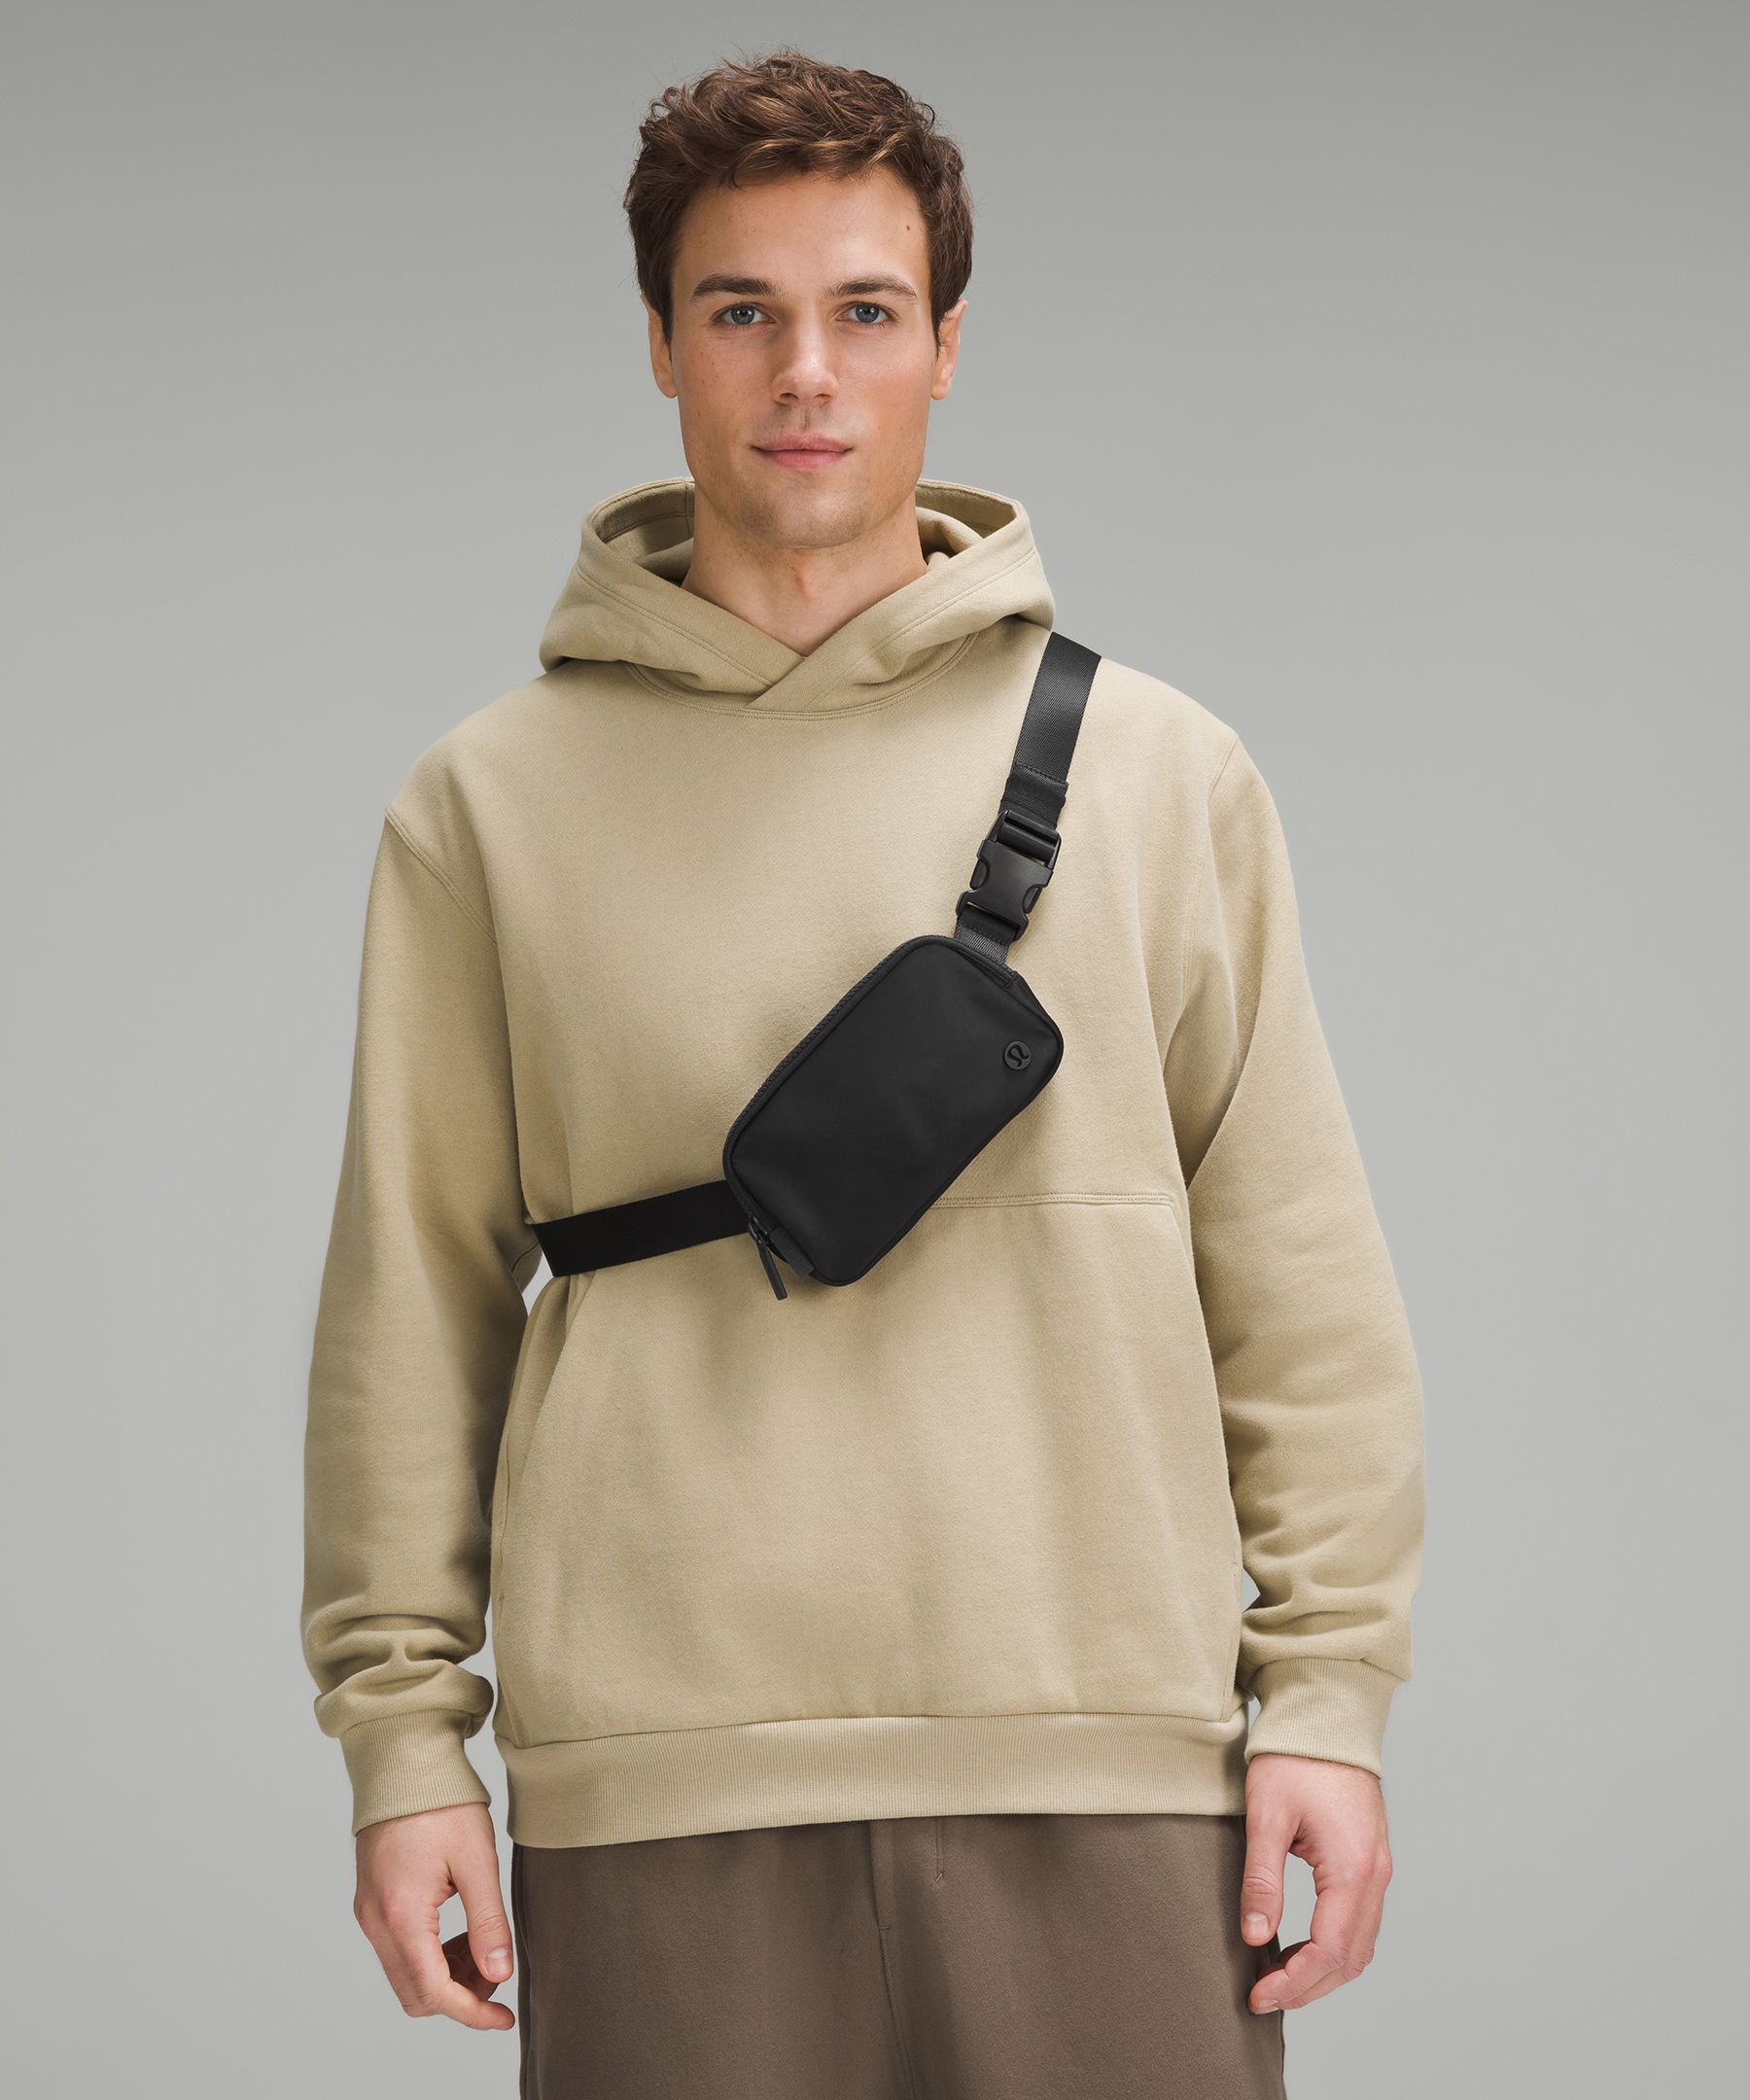 Everywhere Belt Bag Mini | Unisex Bags,Purses,Wallets